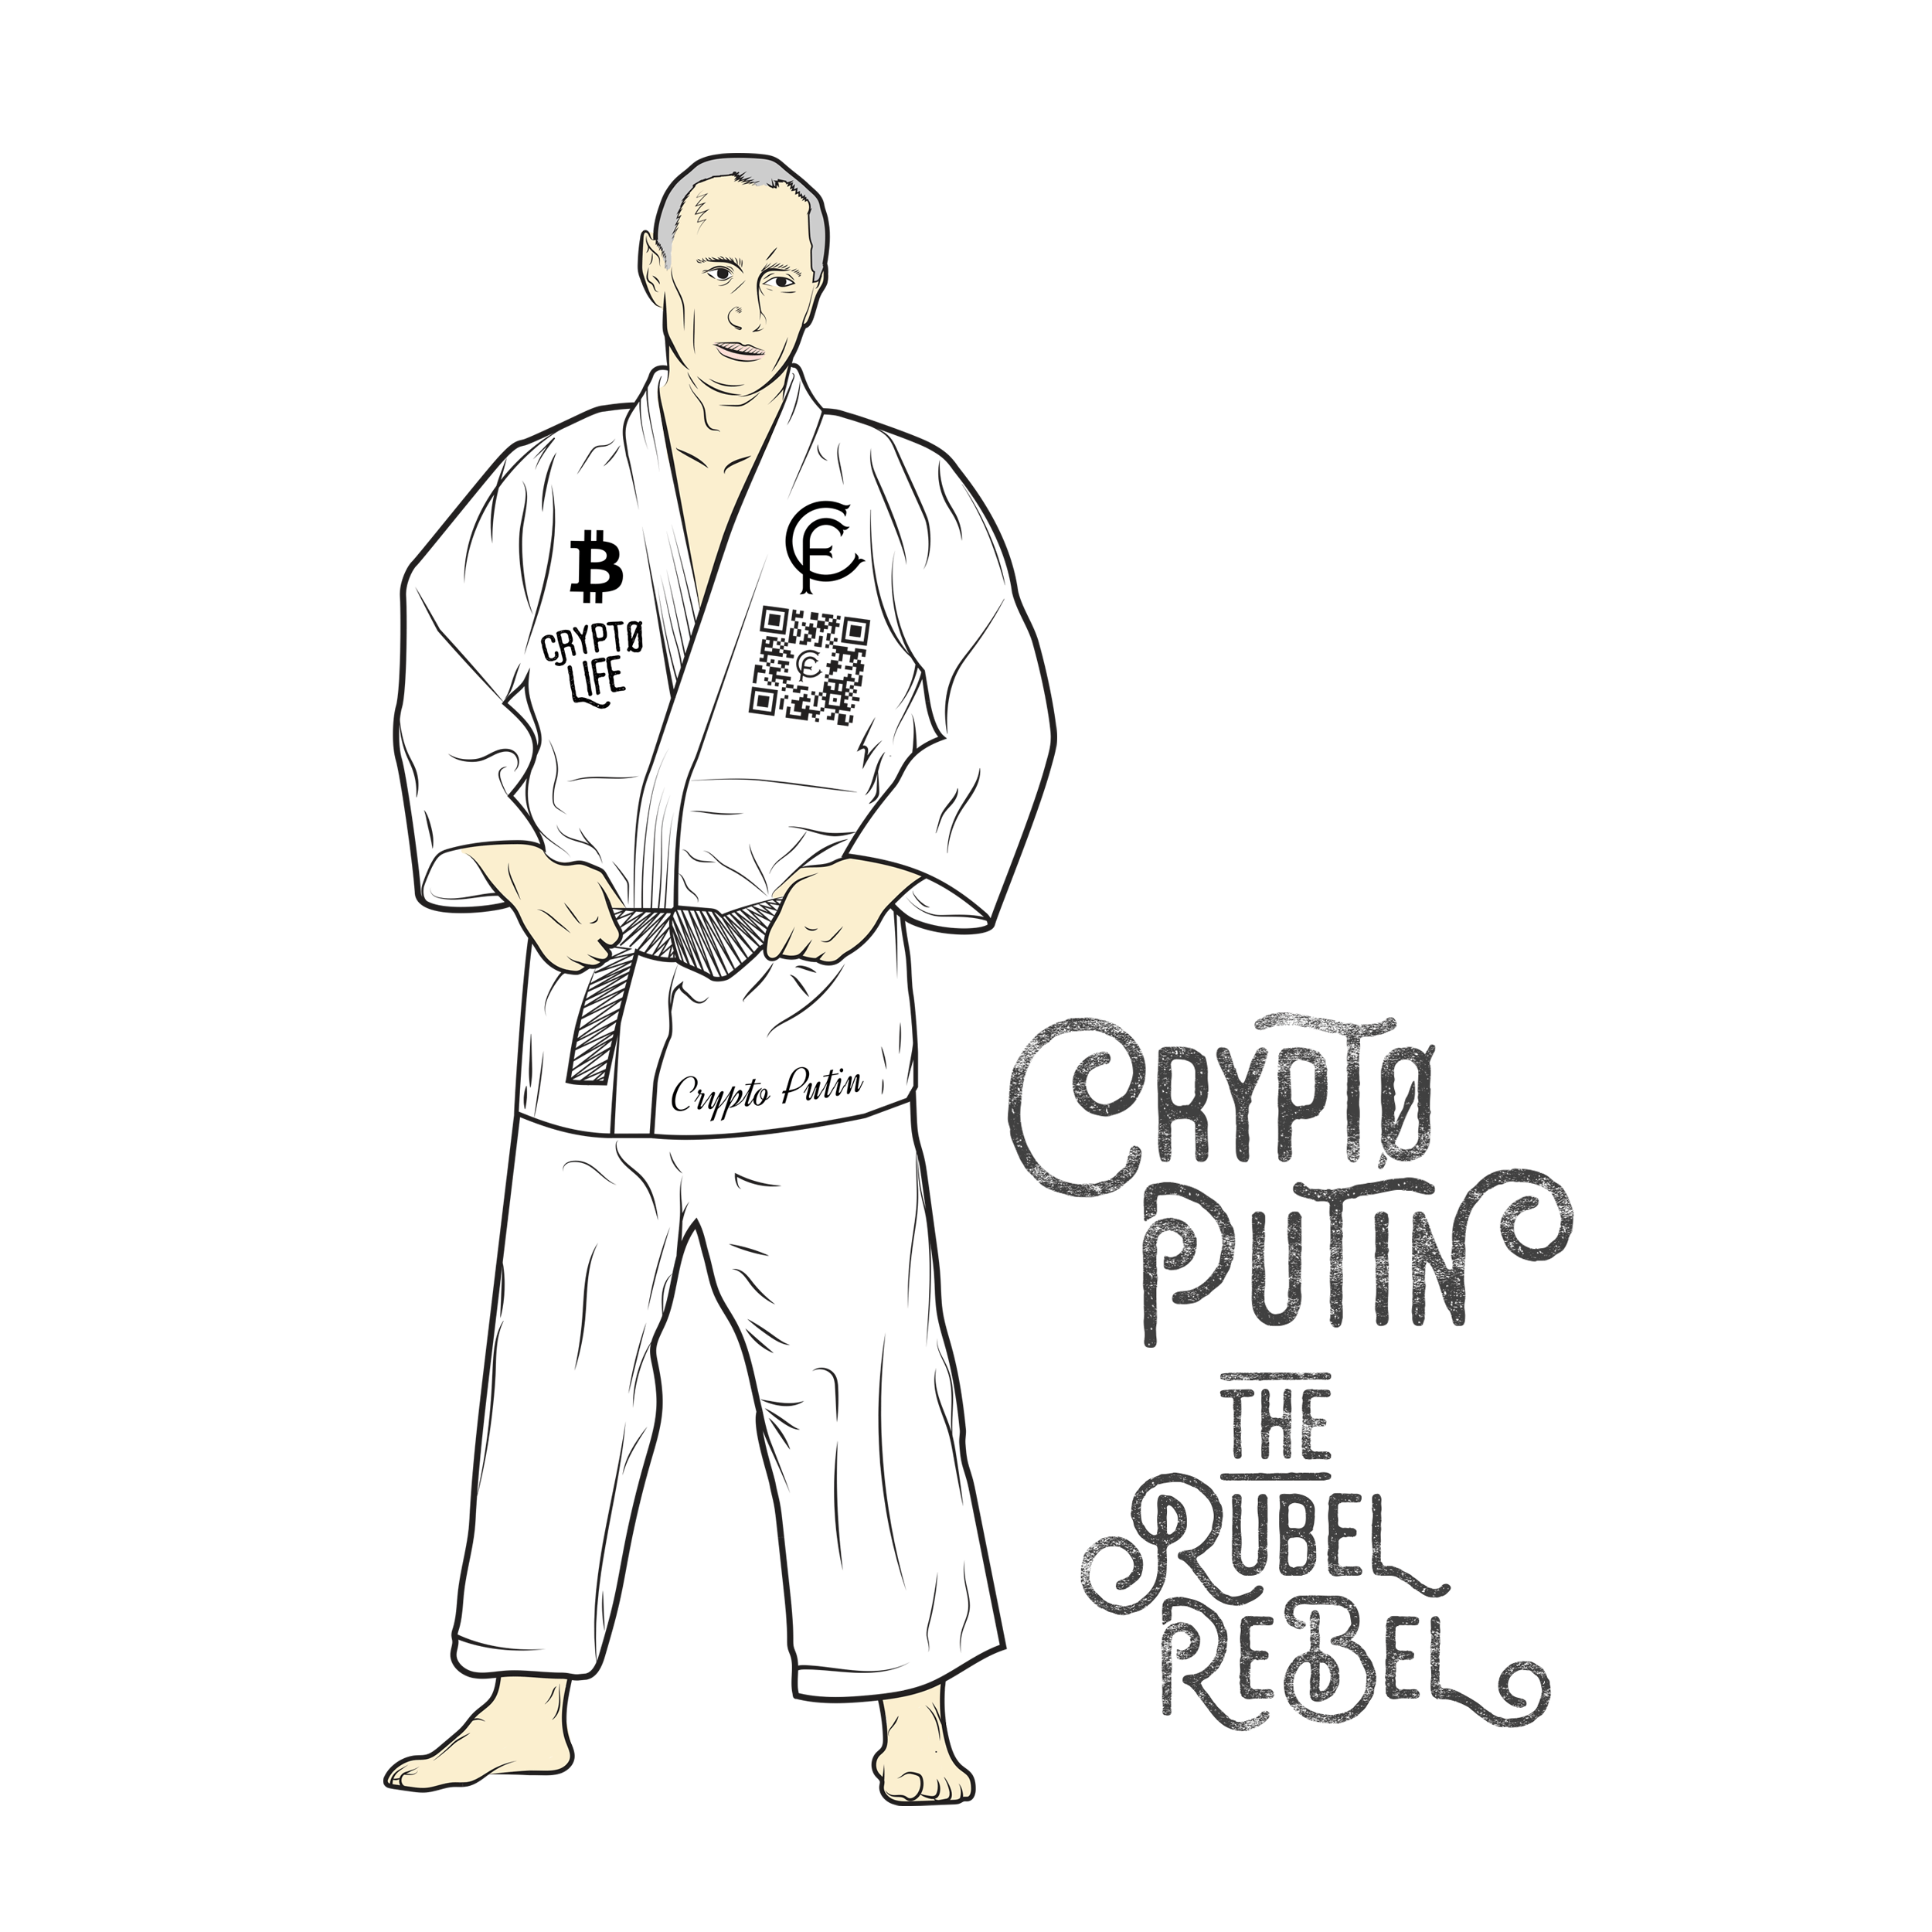 Crypto-Putin-Rubel-Rebel_new.png